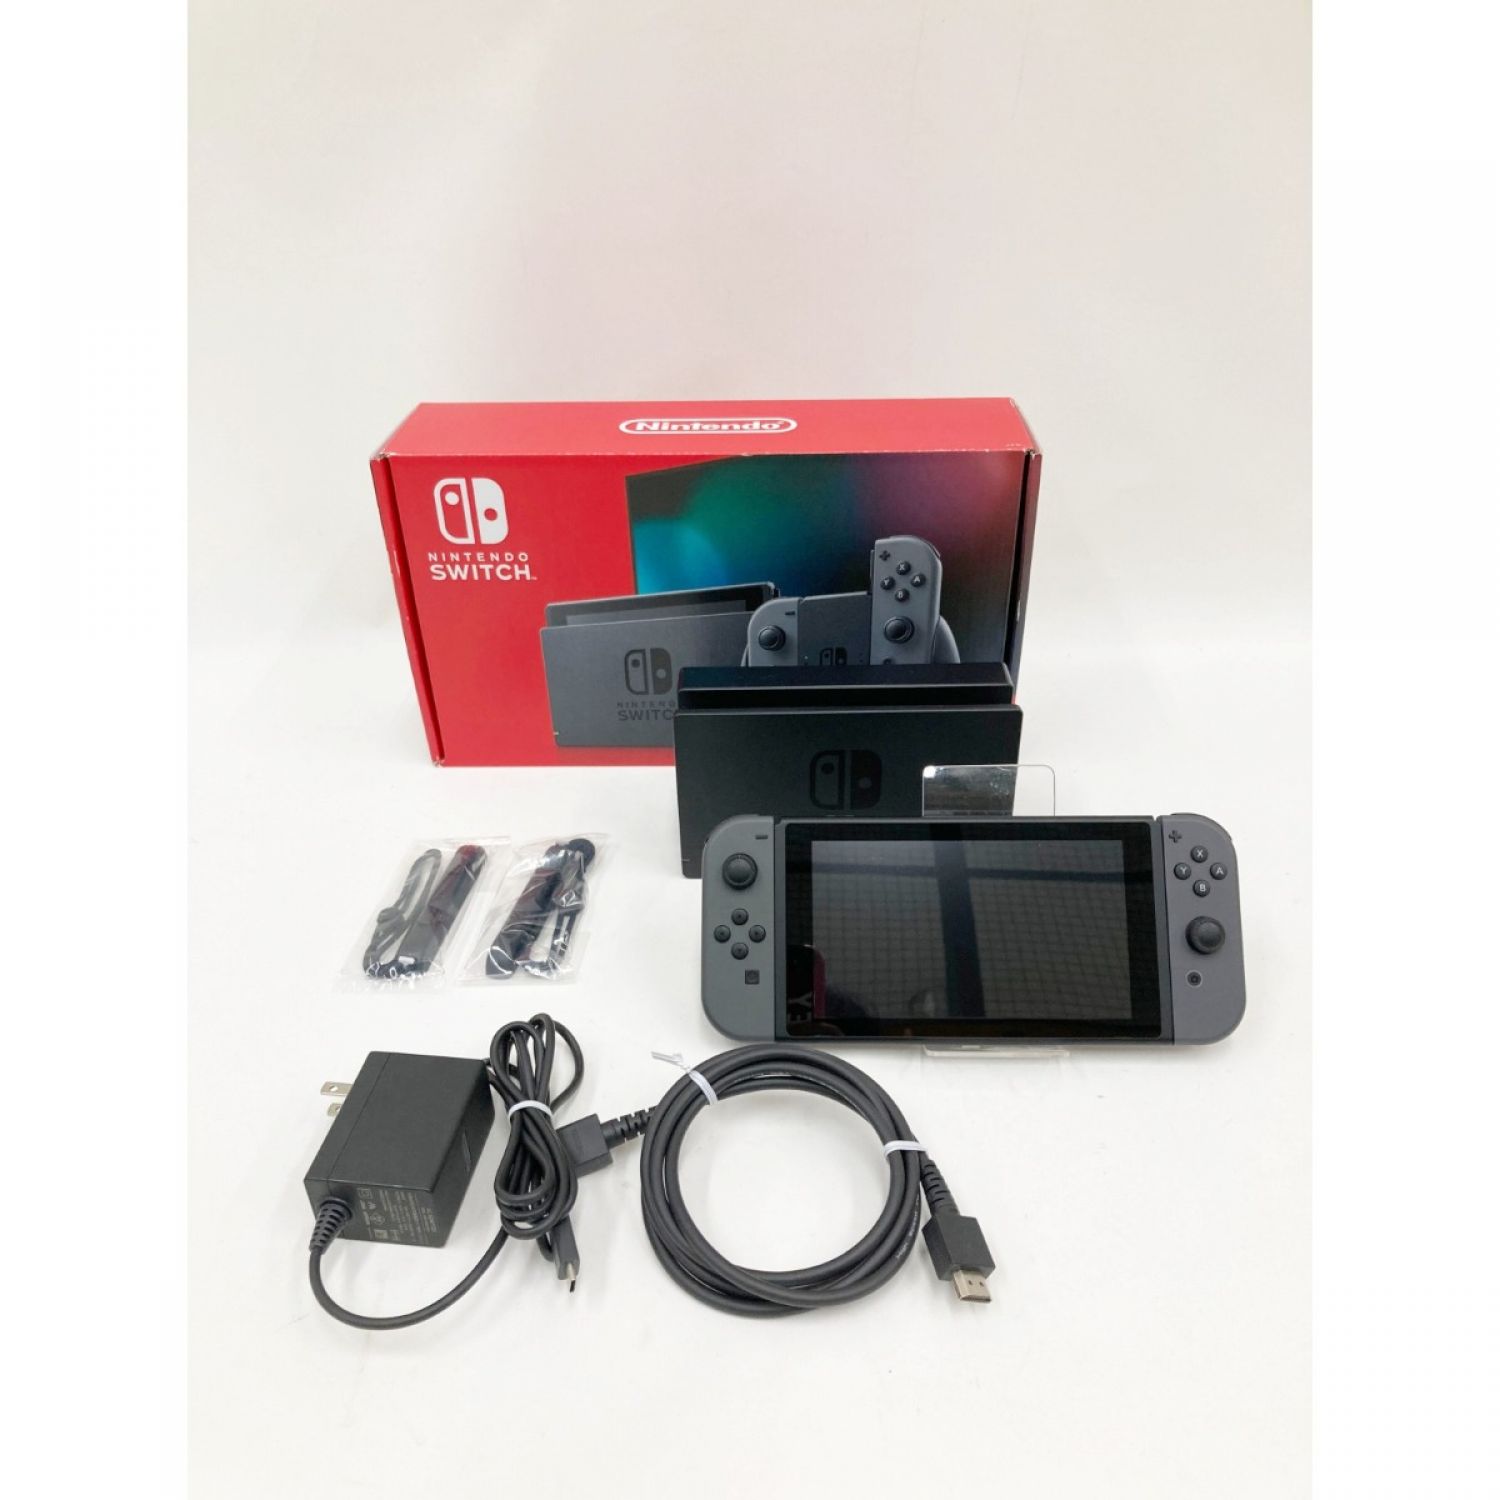 Nintendo Switch ニンテンドースイッチ HAC-001(-01)